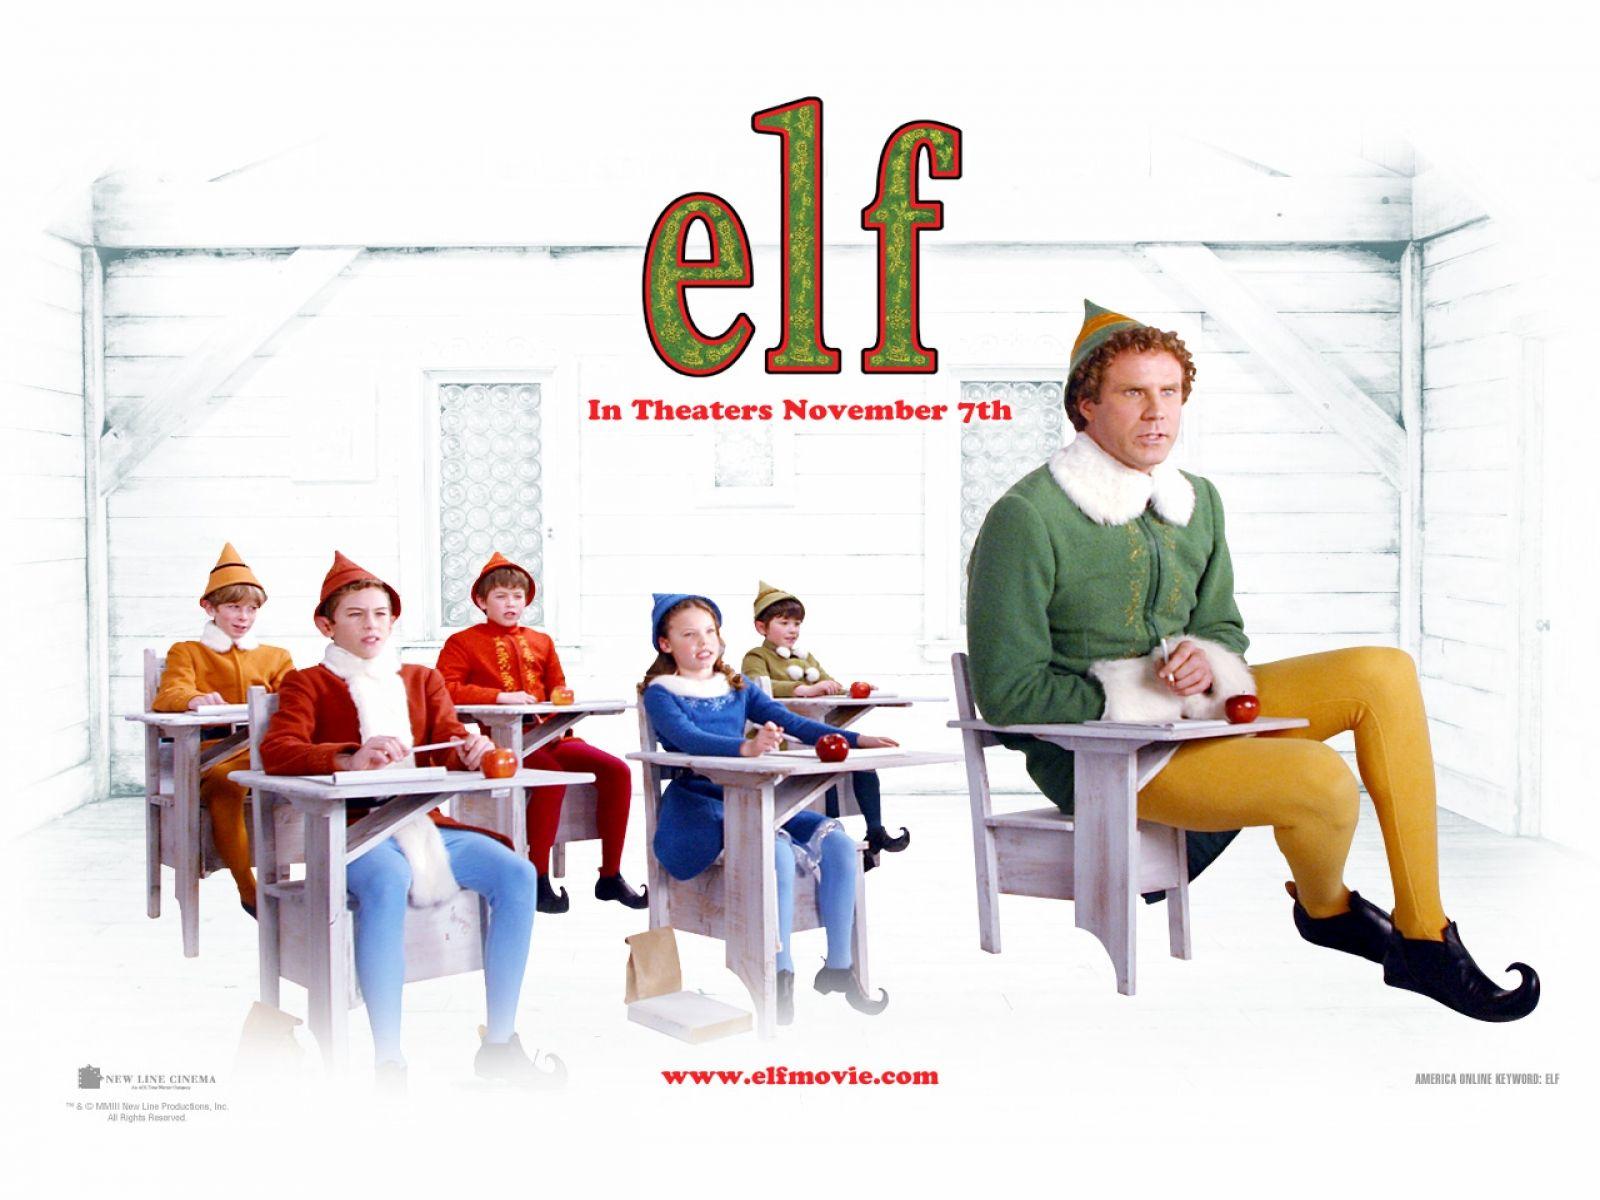 Will Ferrell as Buddy the elf Wallpaper